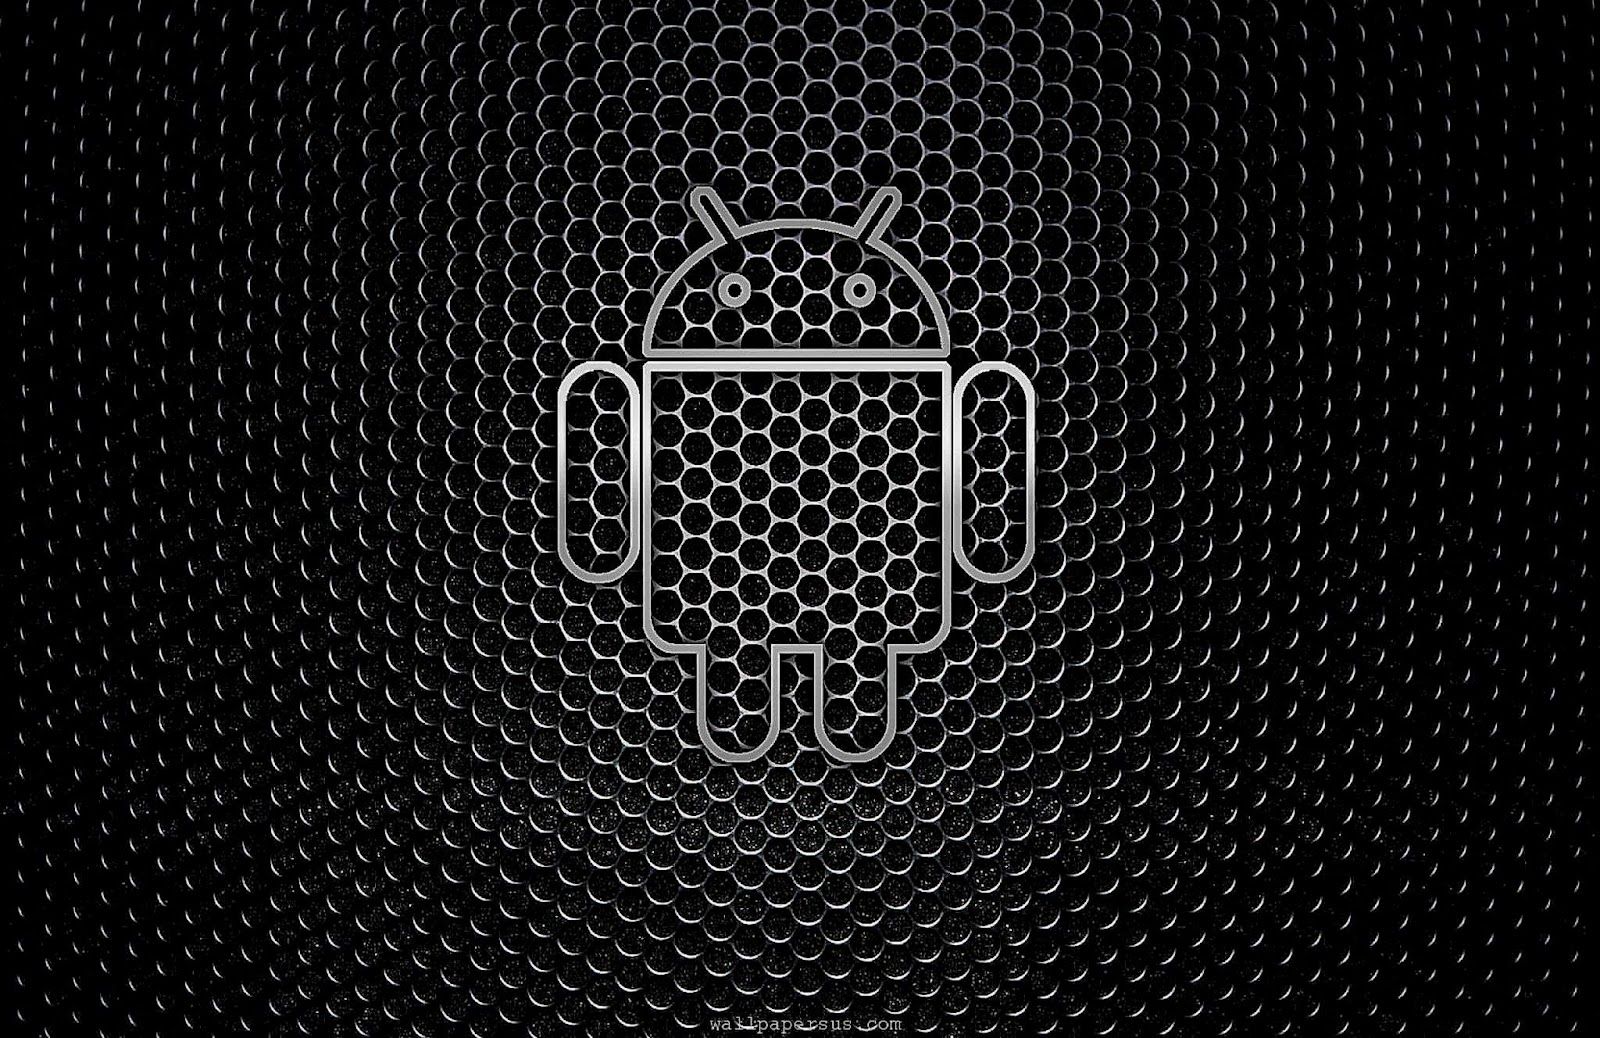 Cool HD Wallpaper: Android Wallpaper Black